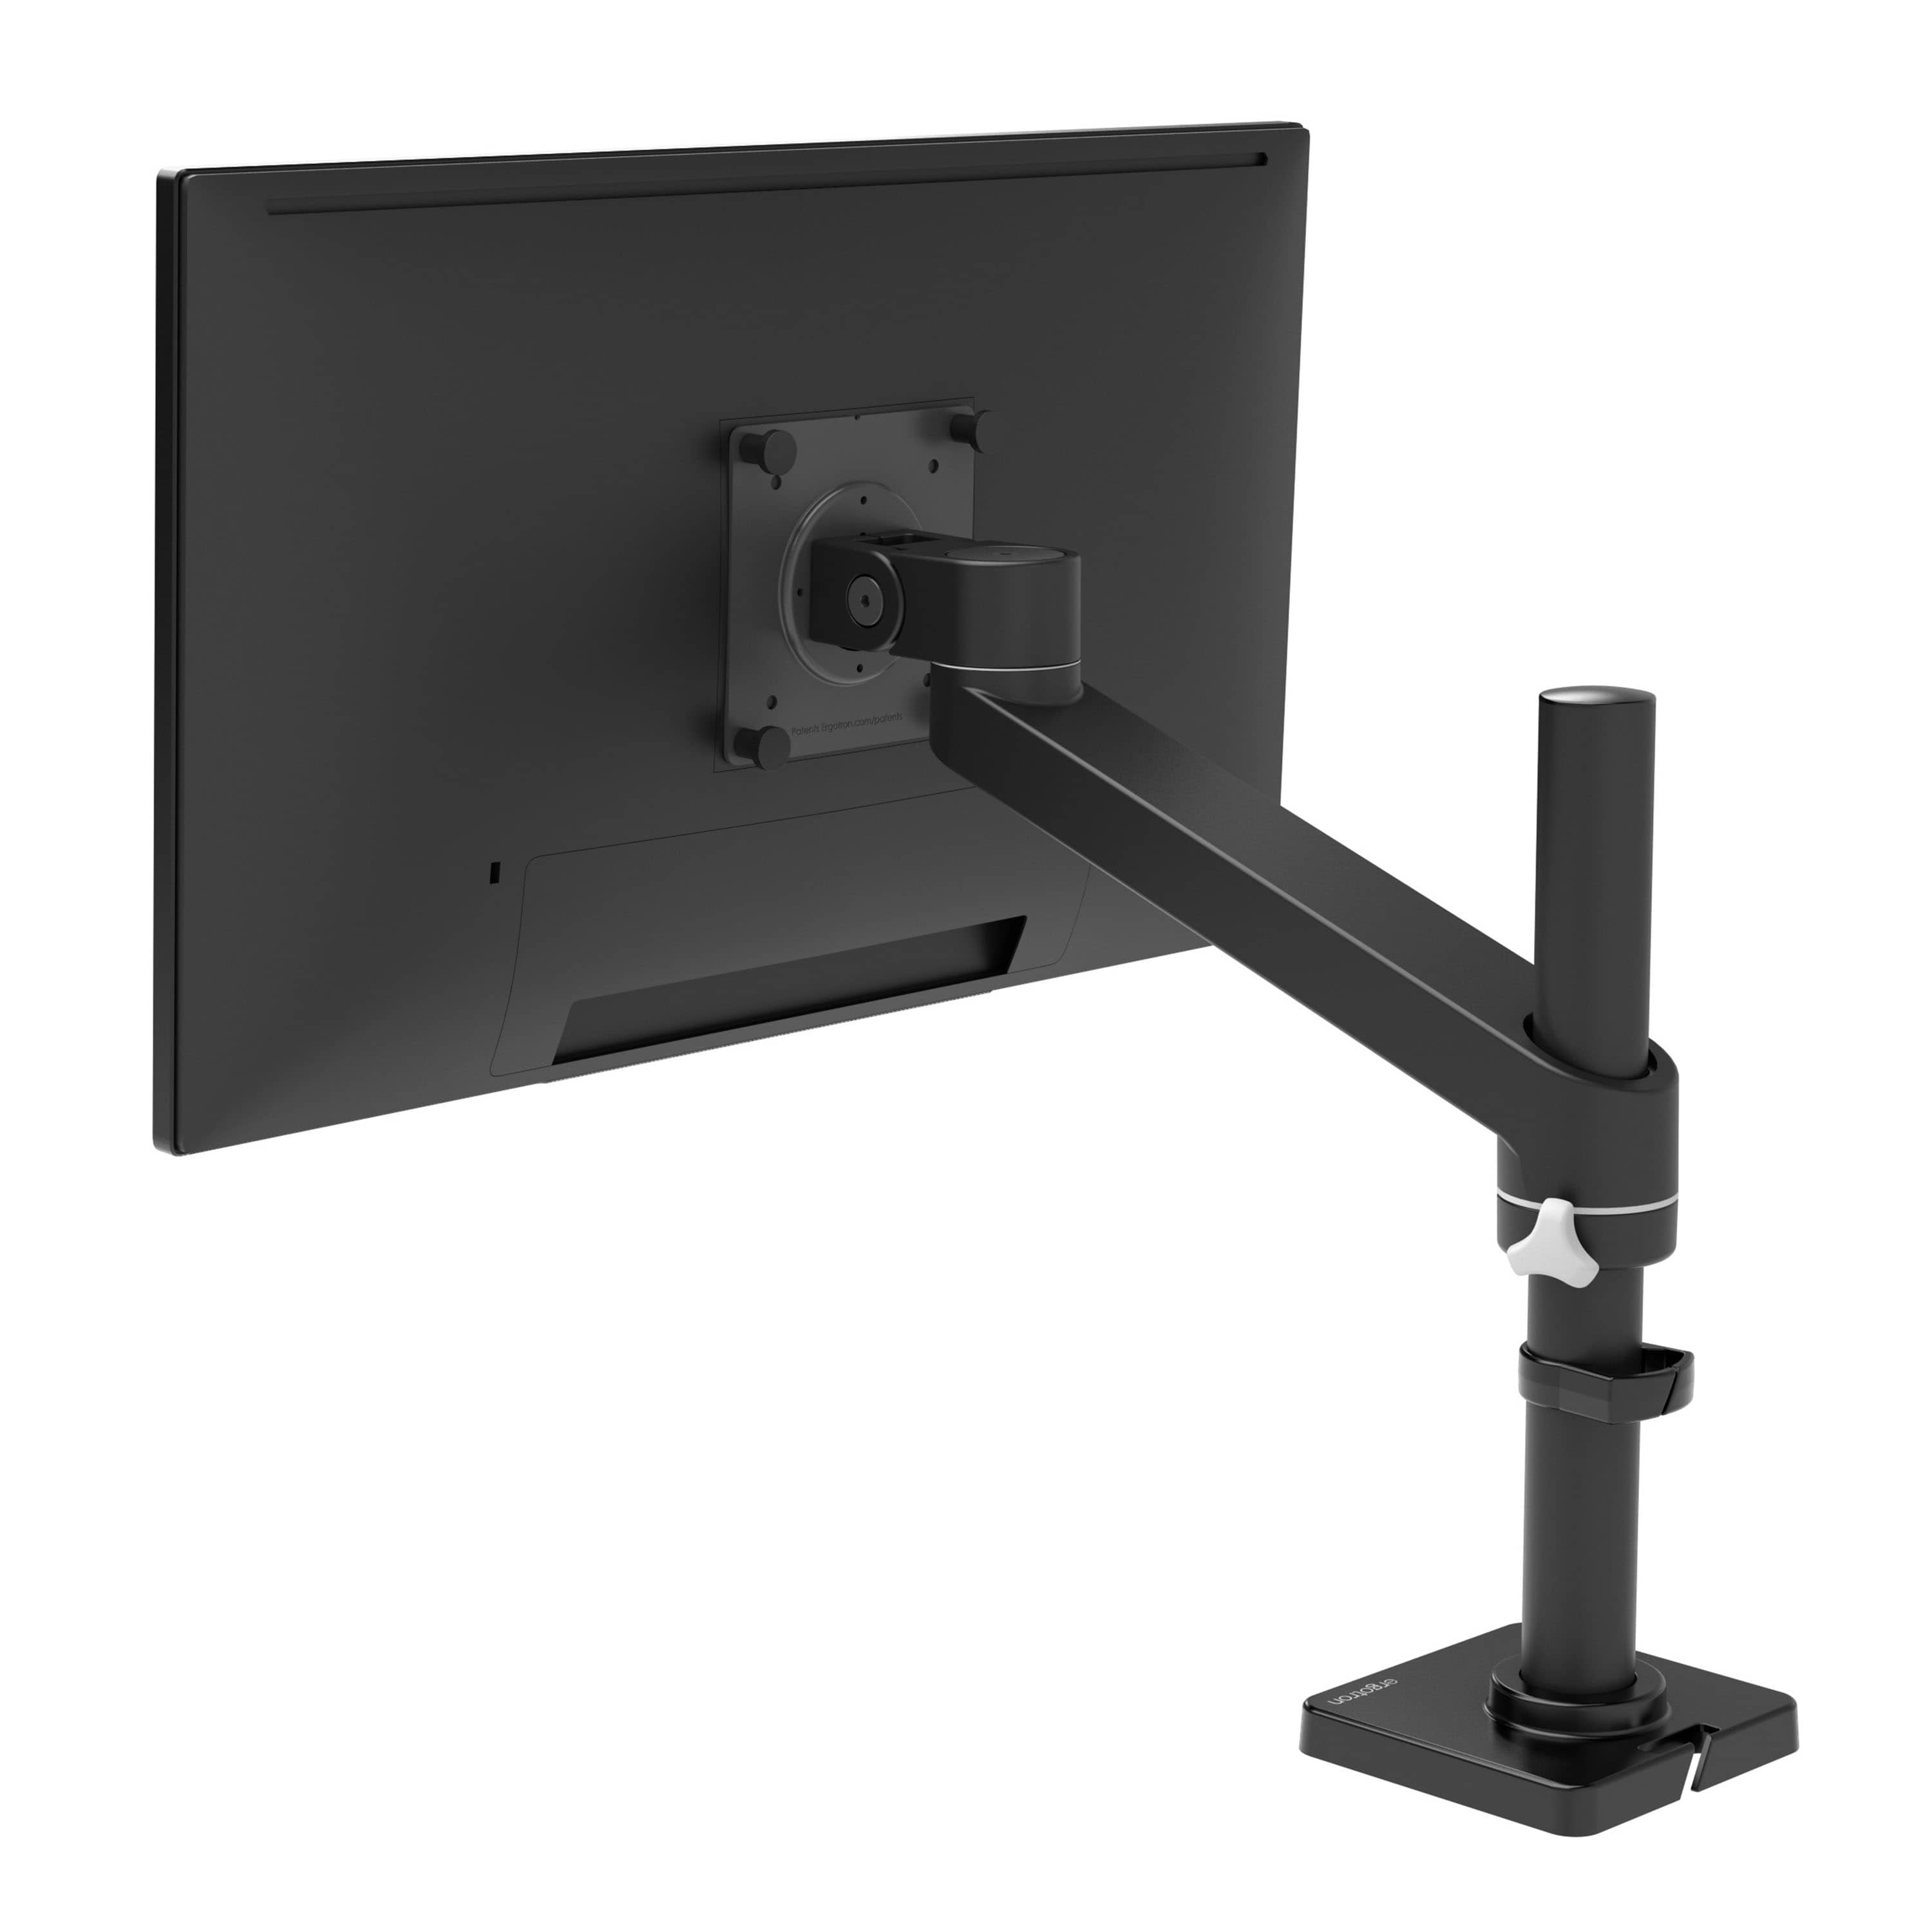 Ergotron Mounting Arm for Monitor - Black 45-669-224